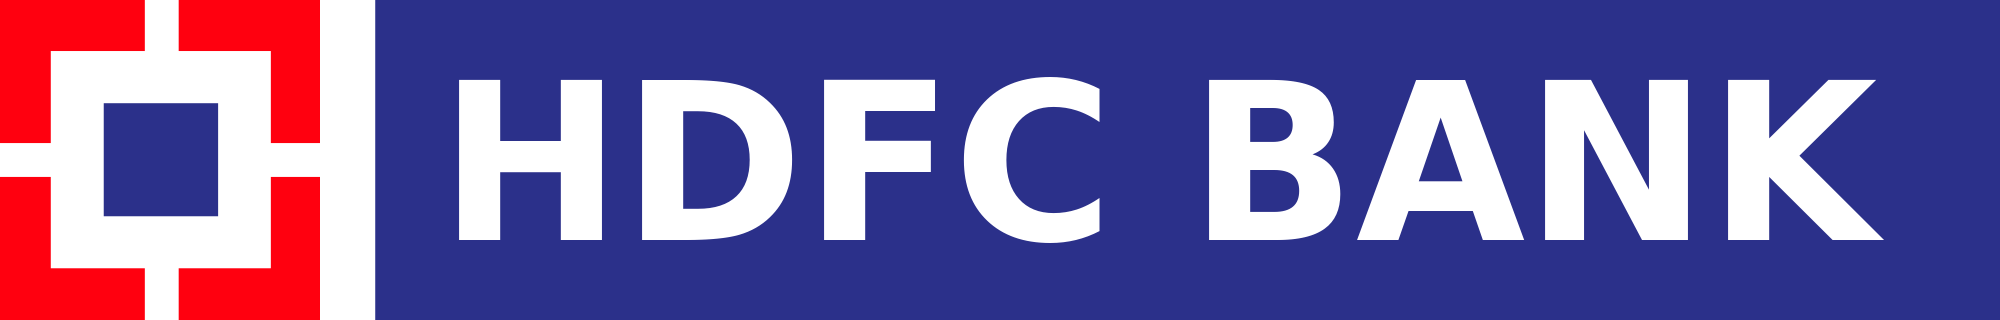 HDFC Bank Logo - File:HDFC-Bank-Logo.svg - Wikimedia Commons